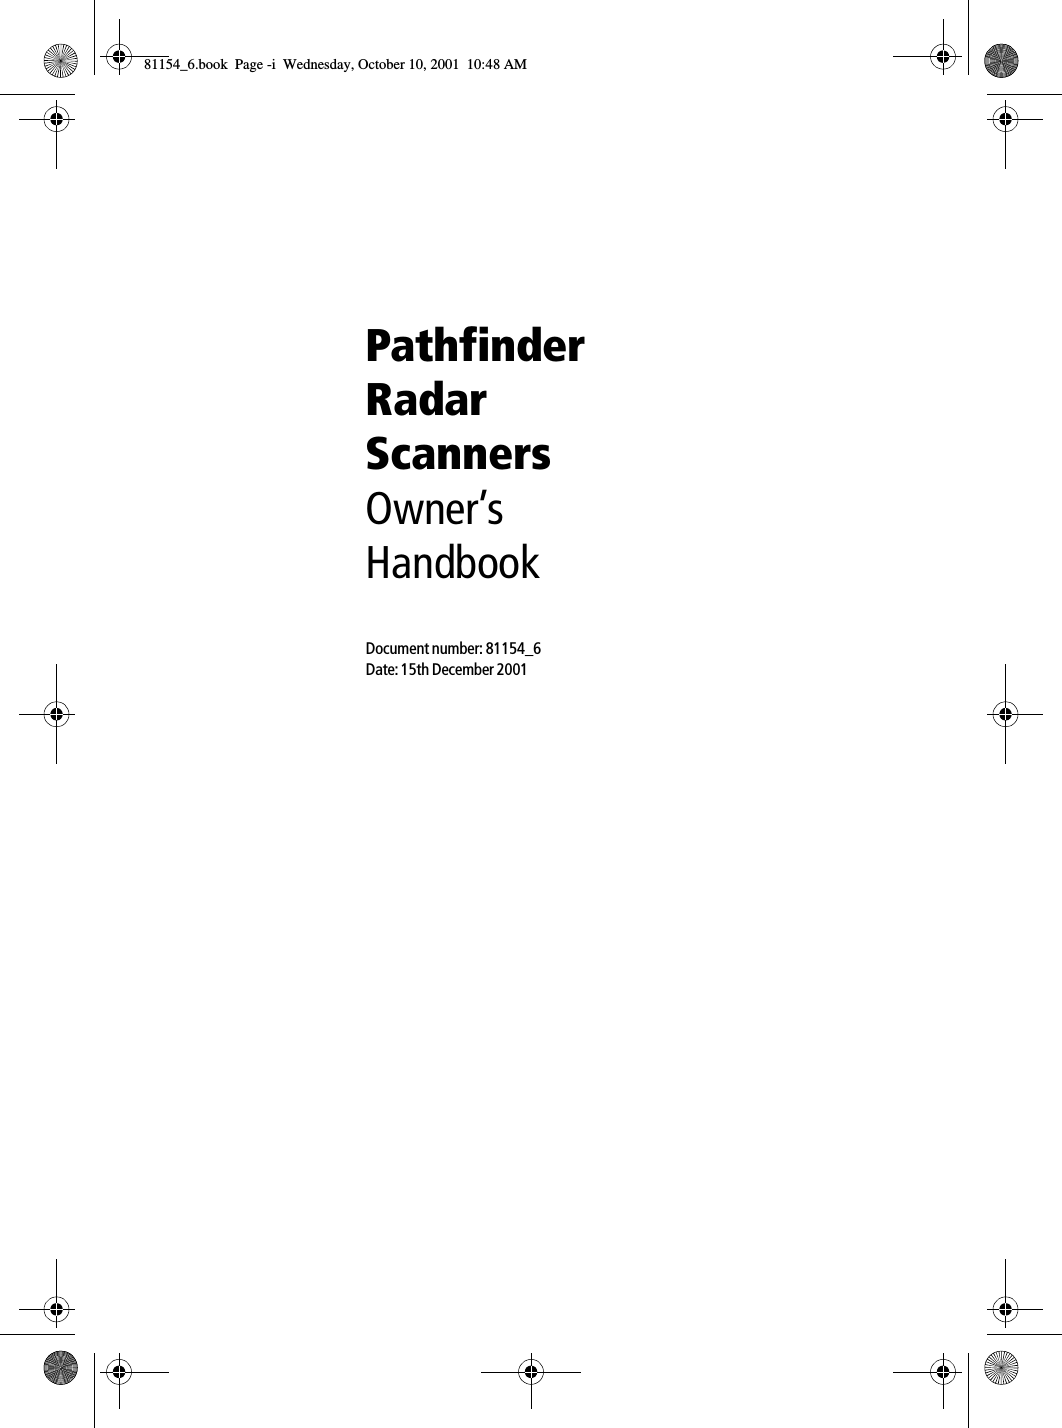 Pathfinder Radar ScannersOwner’s HandbookDocument number: 81154_6Date: 15th December 200181154_6.book  Page -i  Wednesday, October 10, 2001  10:48 AM